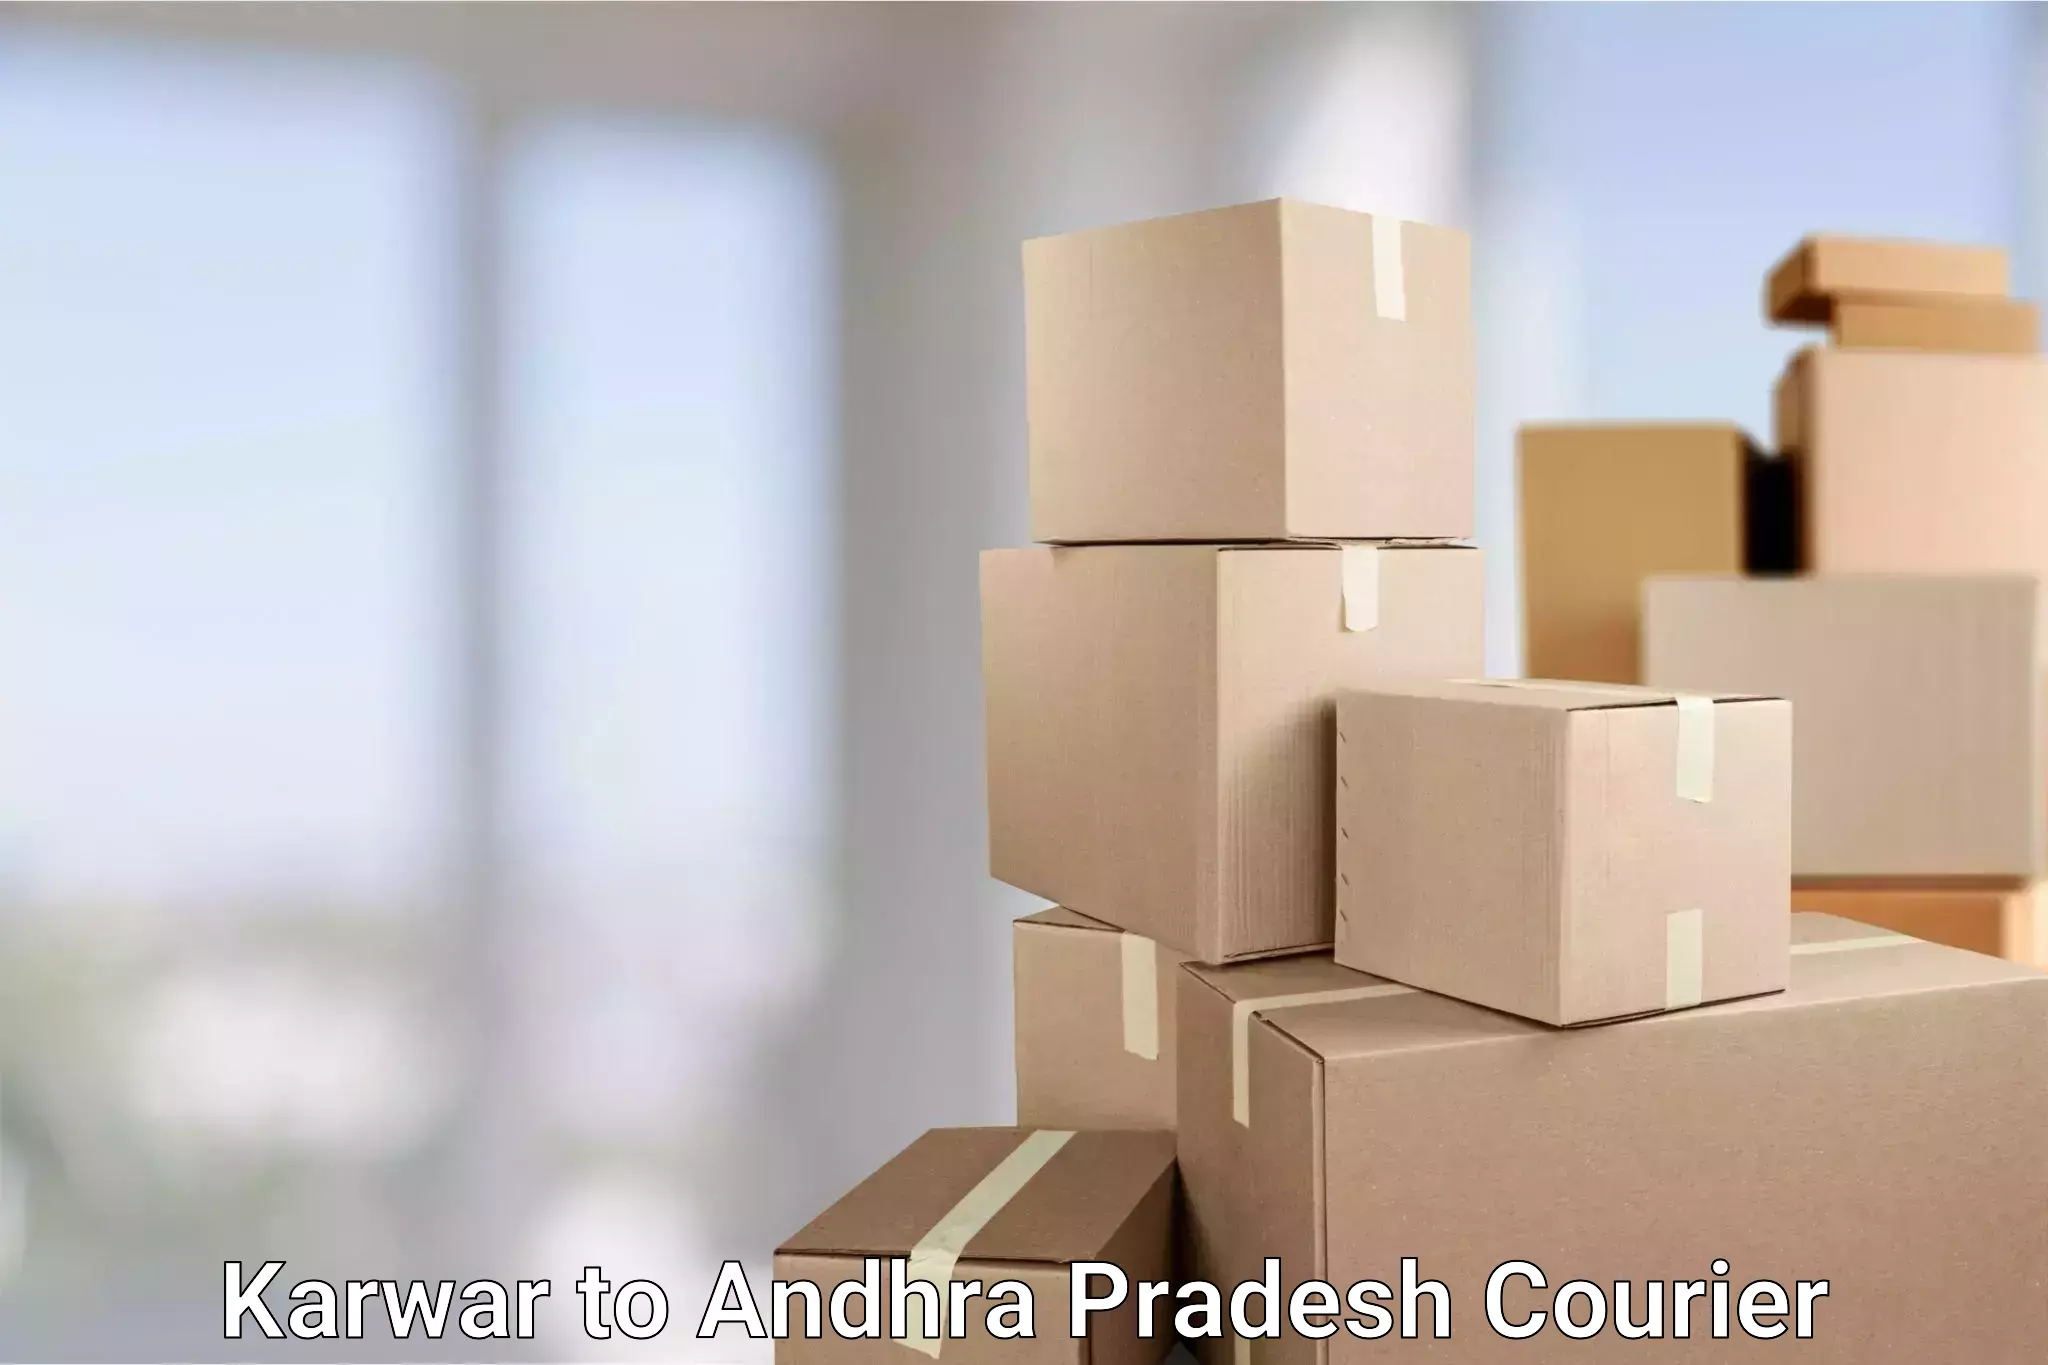 Package delivery network Karwar to Kathipudi